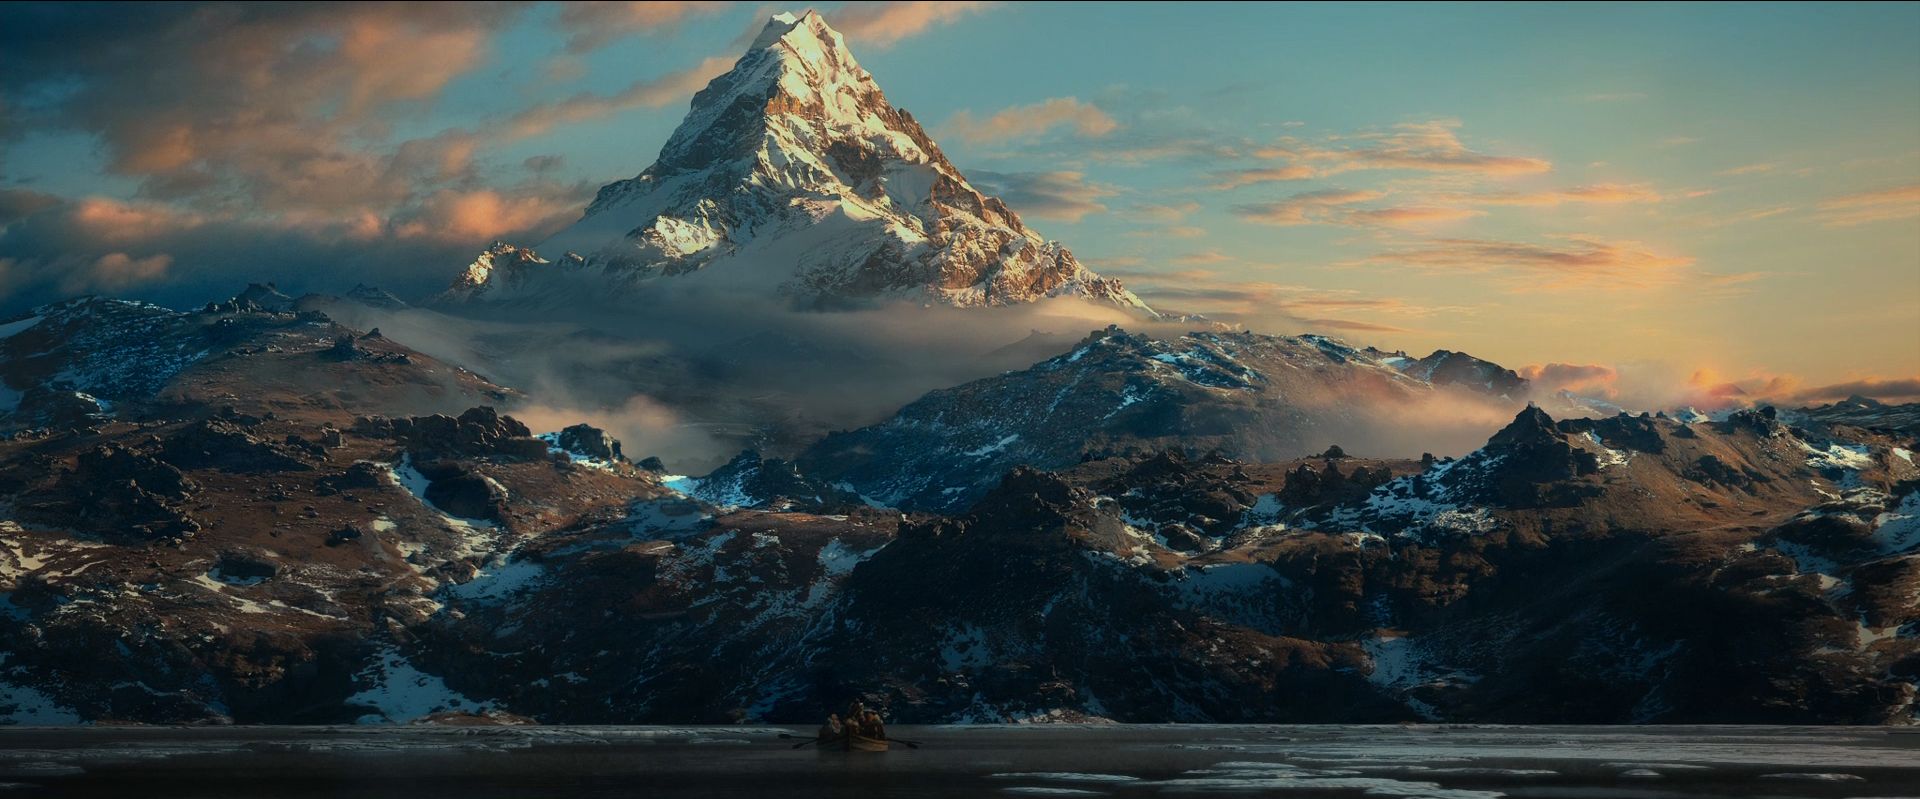 The Hobbit Trailer Analysis - The Desolation of Smaug | Hobbit ...